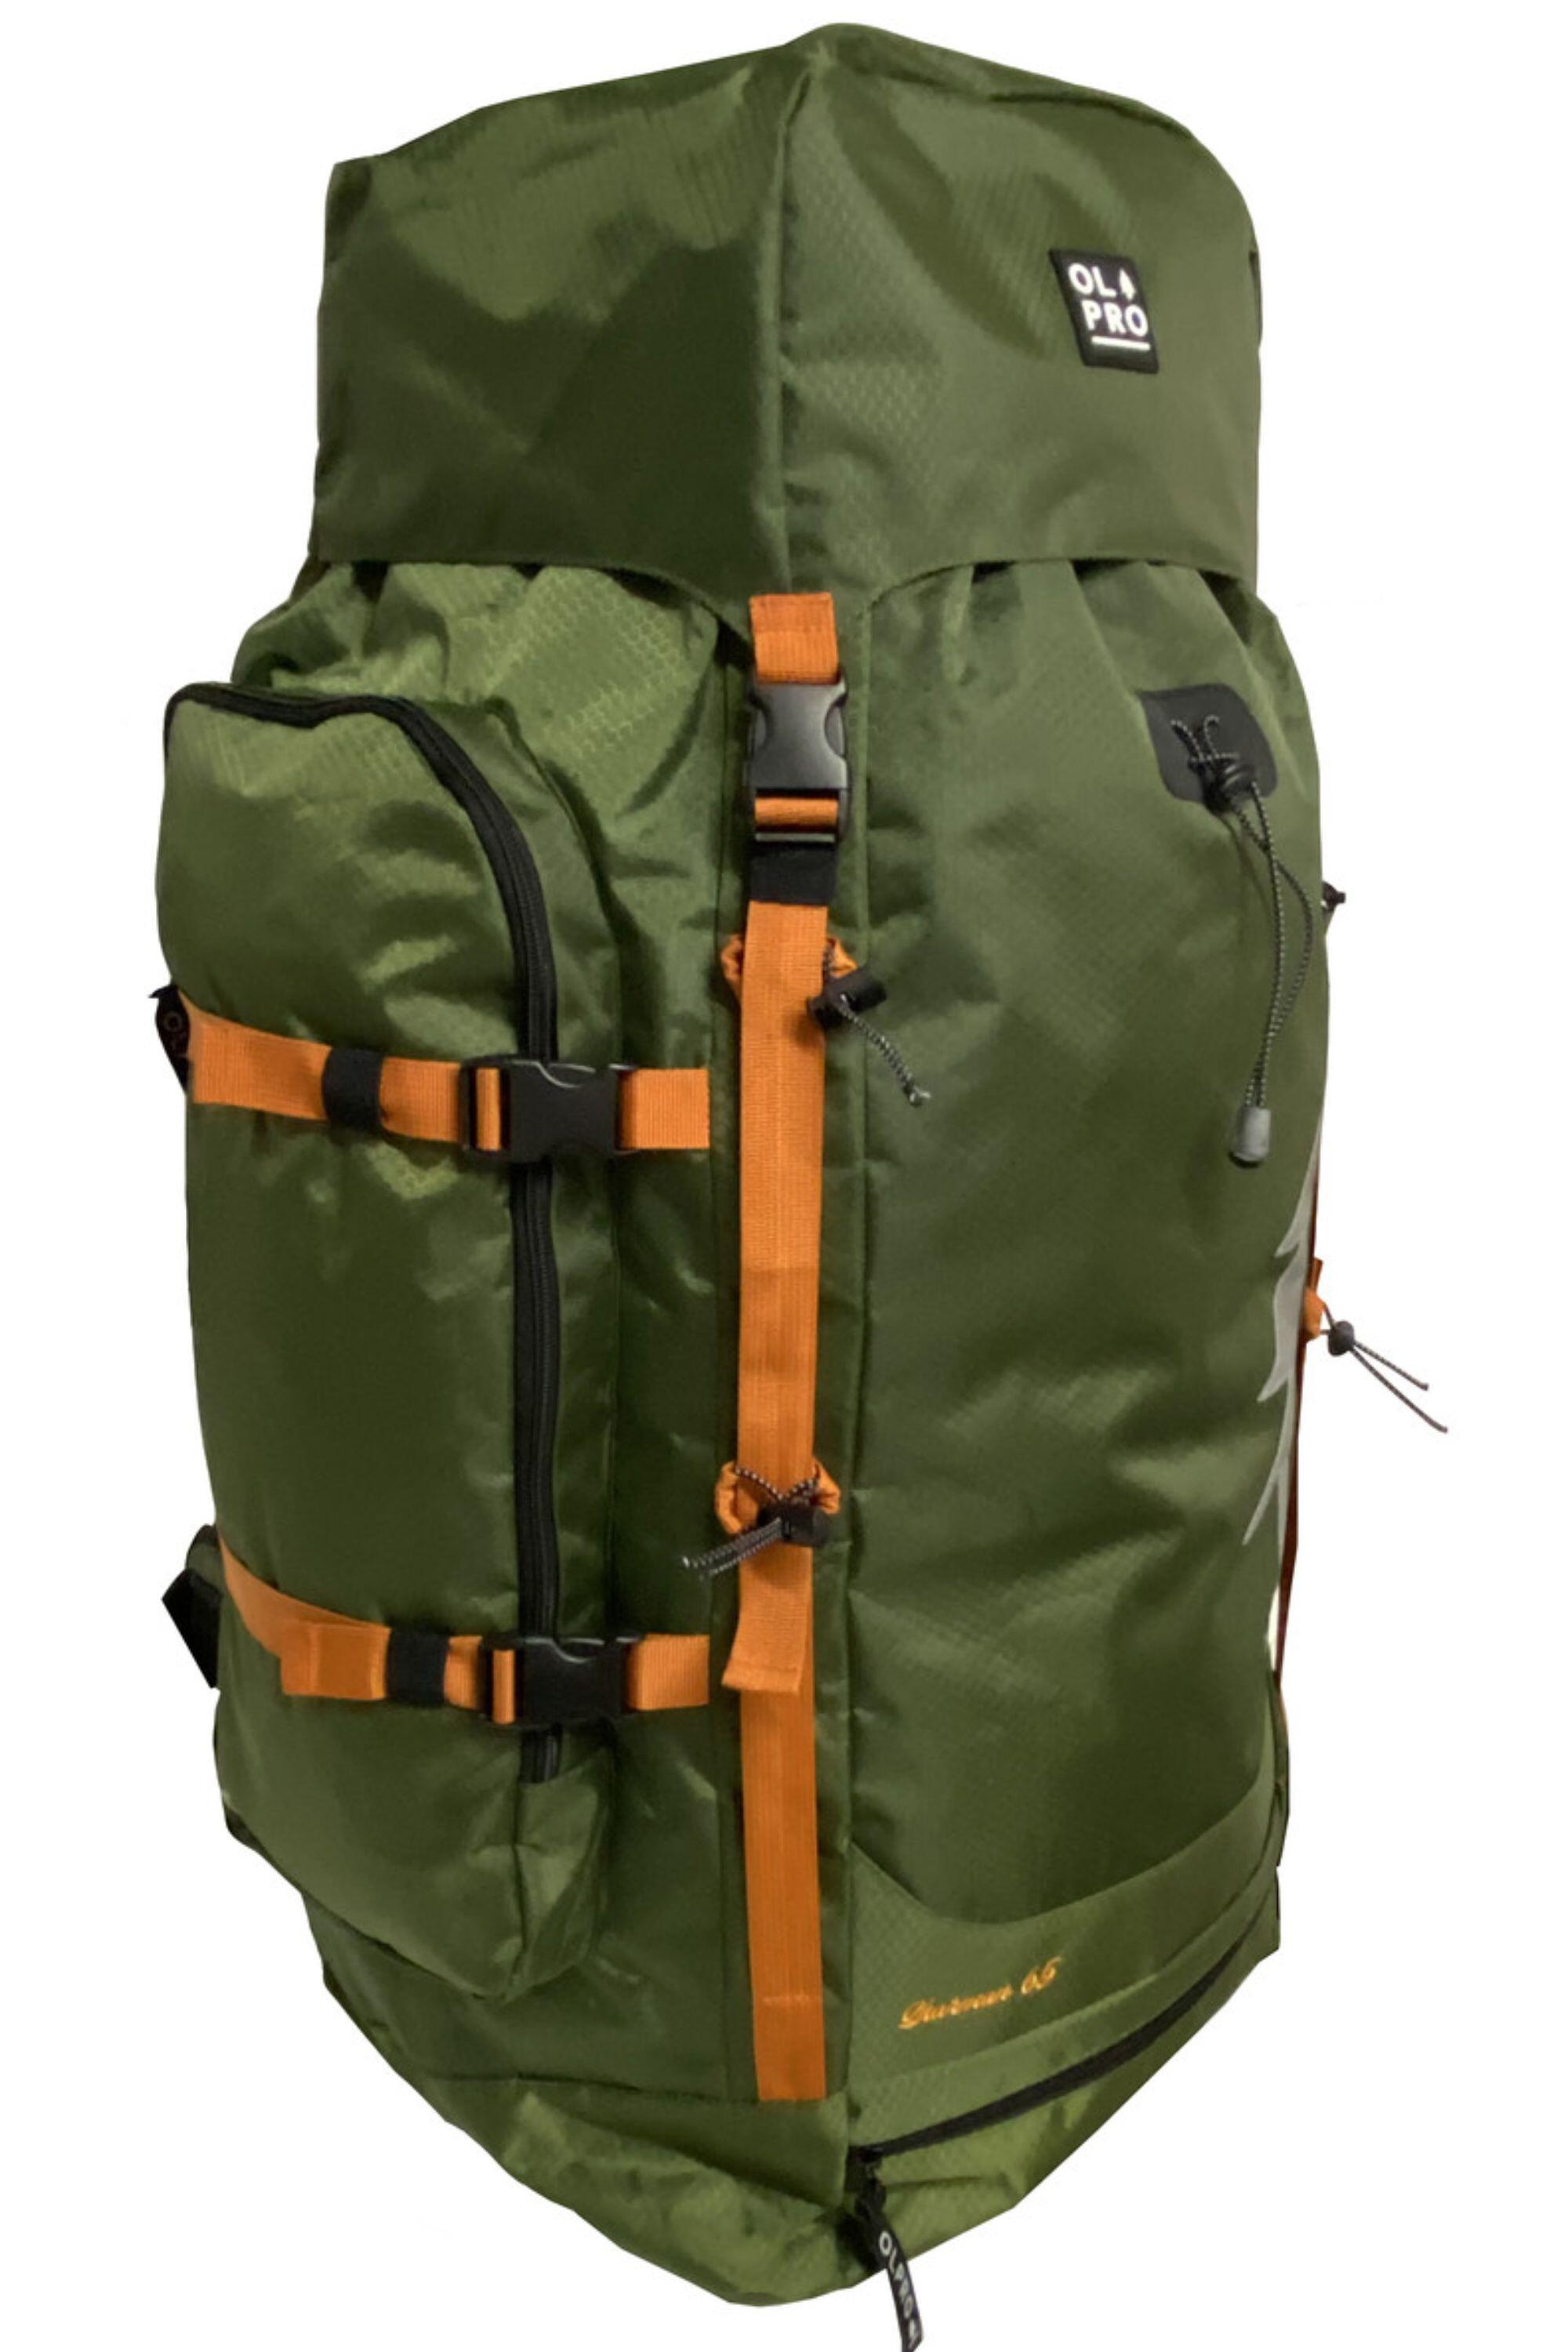 OLPRO 65L Rucksack Bag Green 1/4